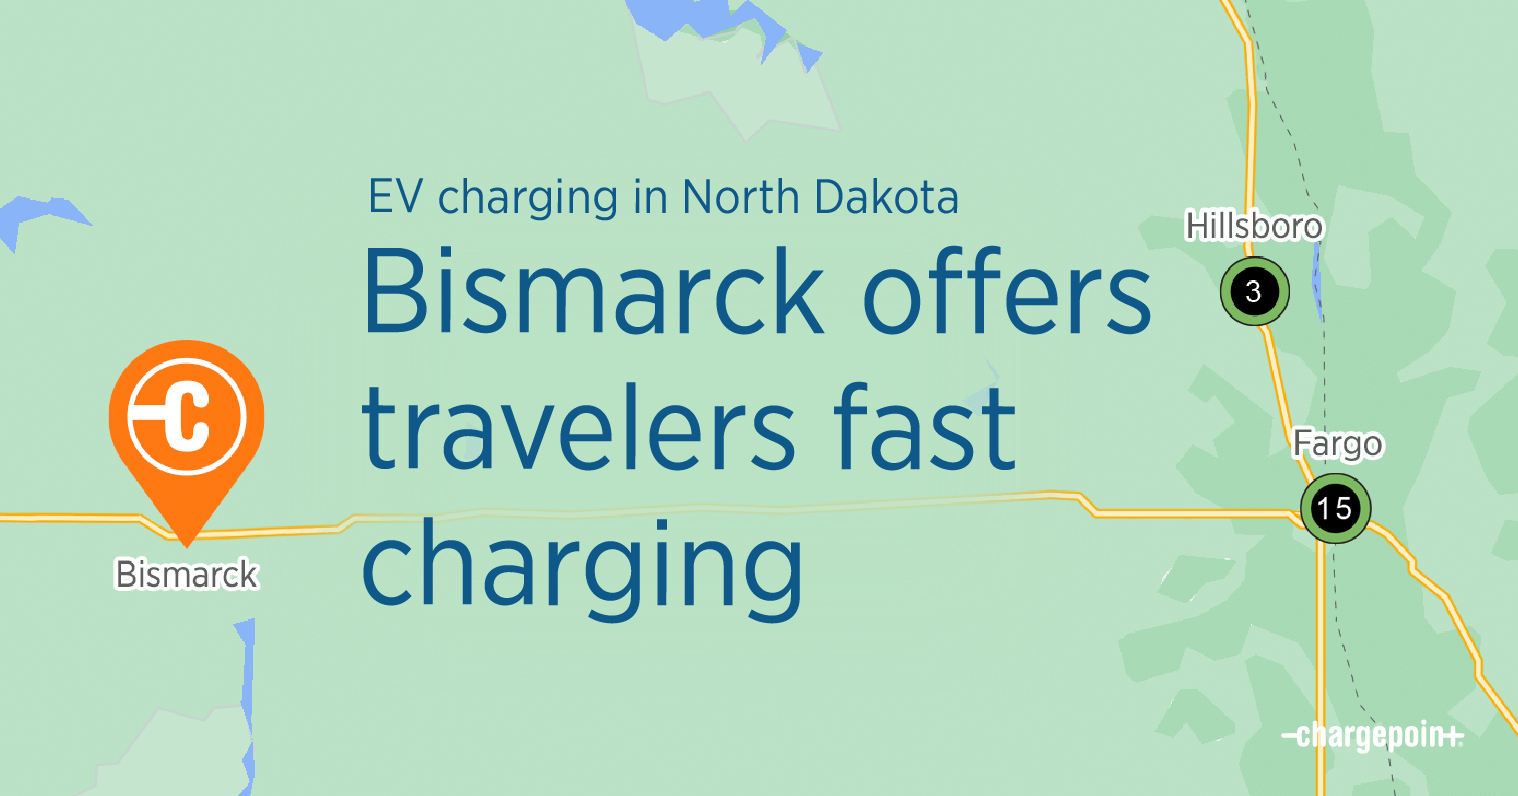 Bismarck offers travelers fast charging